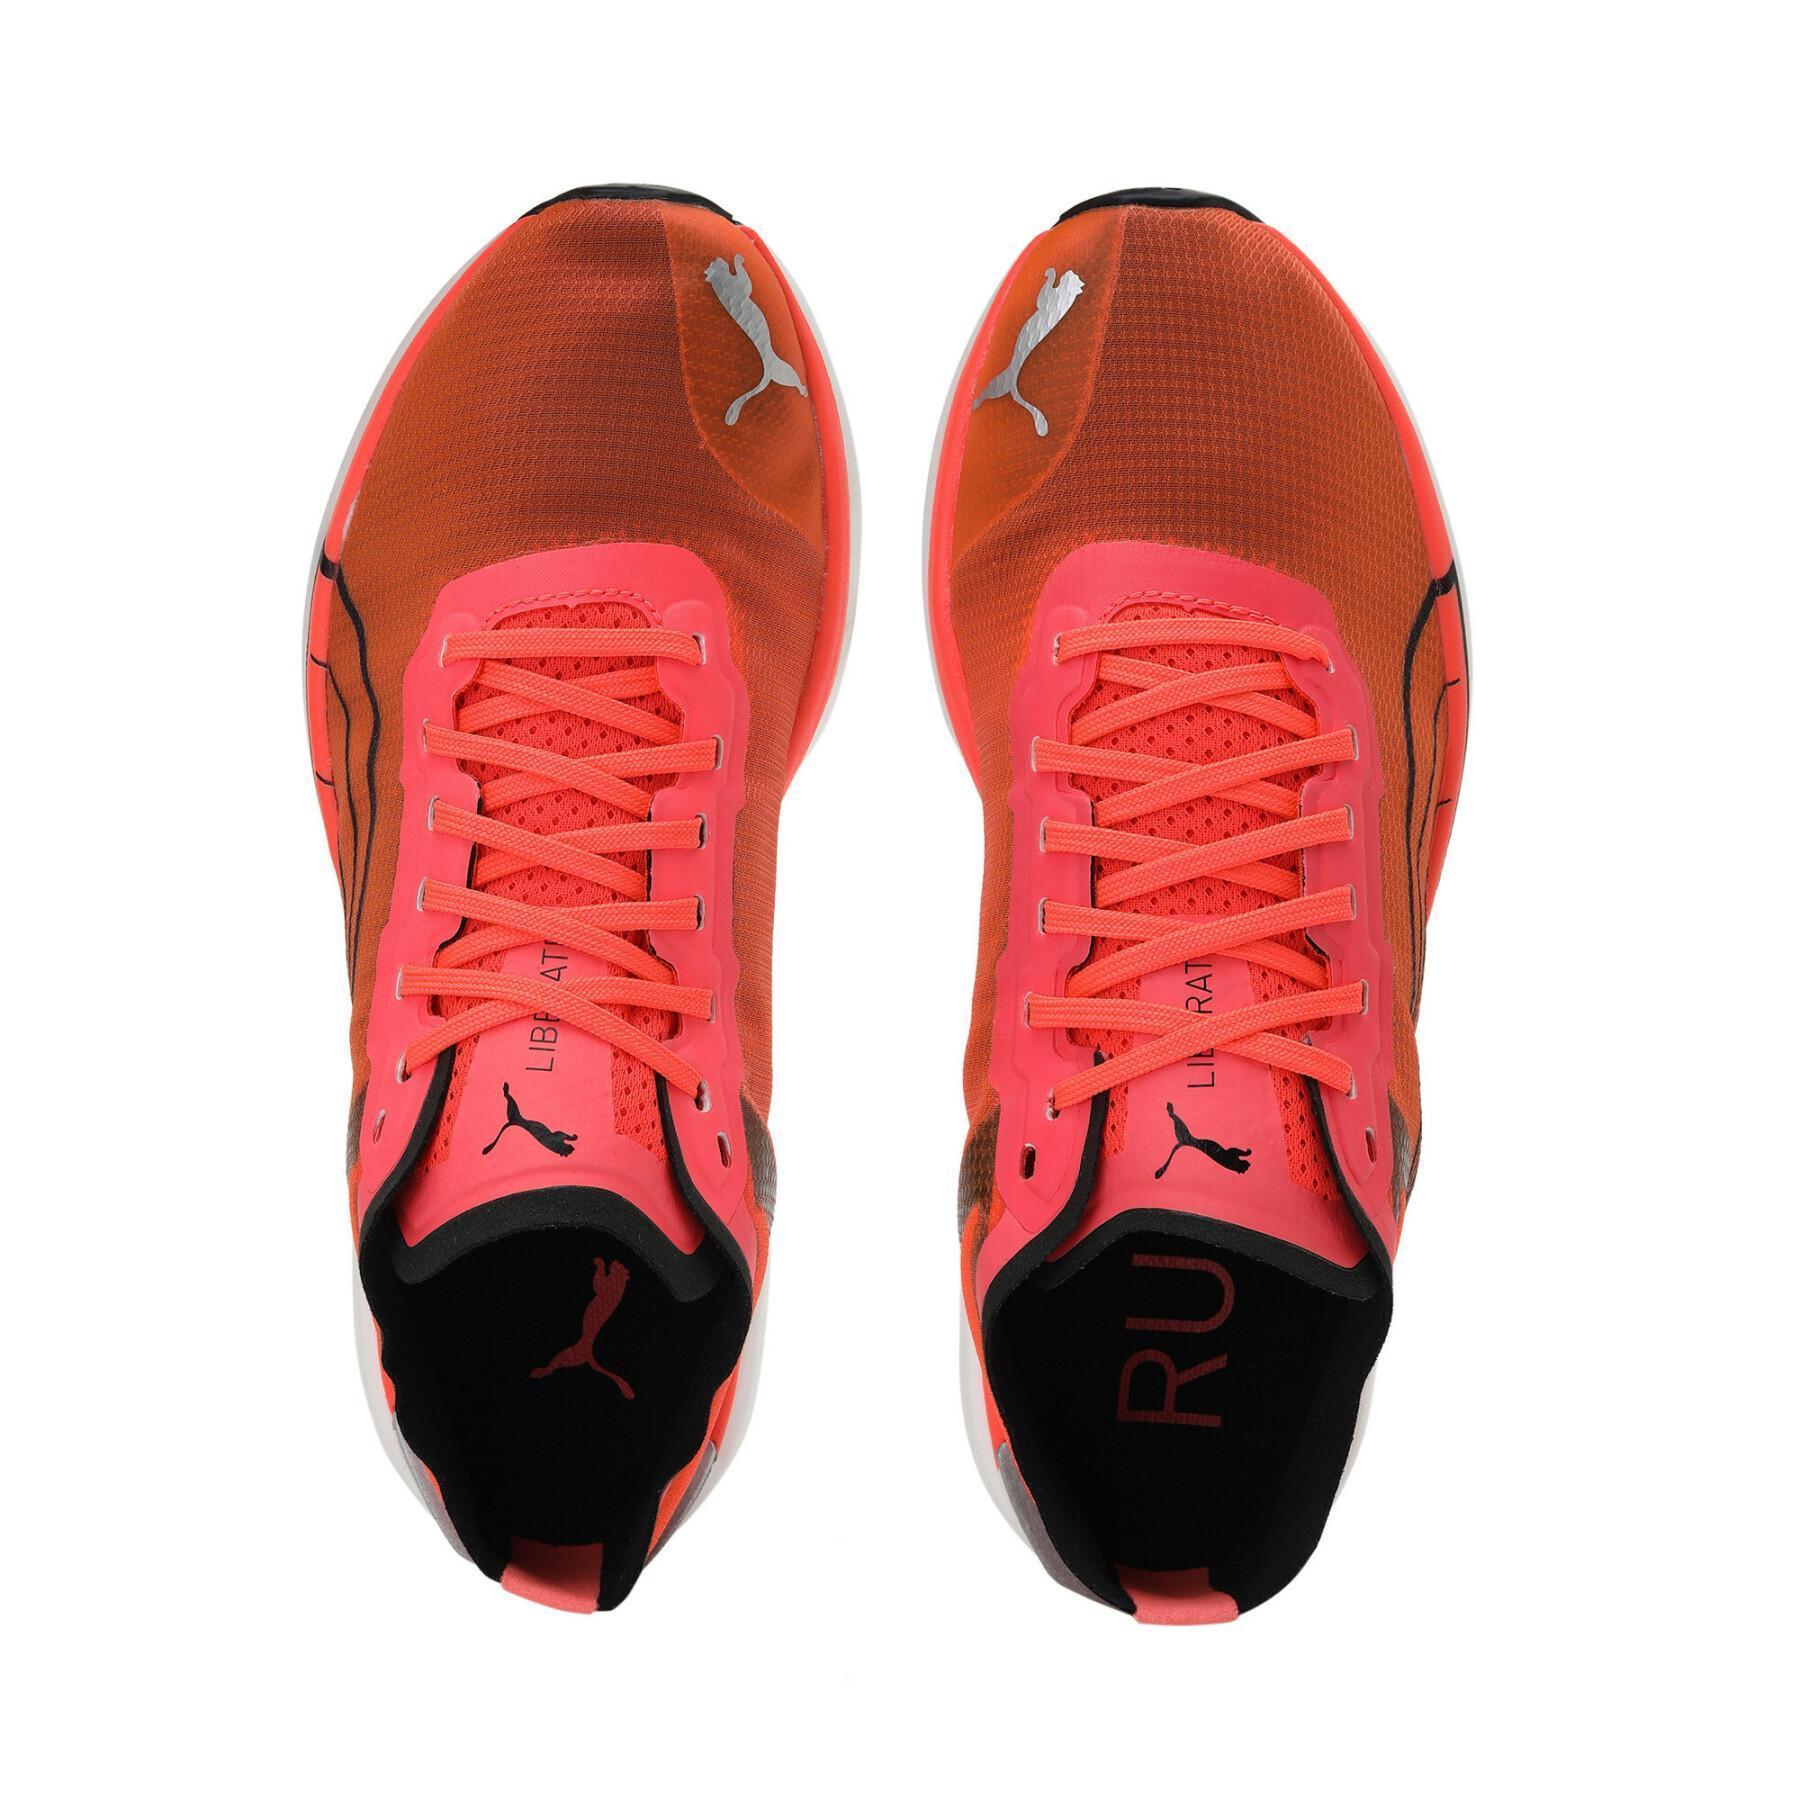 Women's running shoes Puma Liberate Nitro